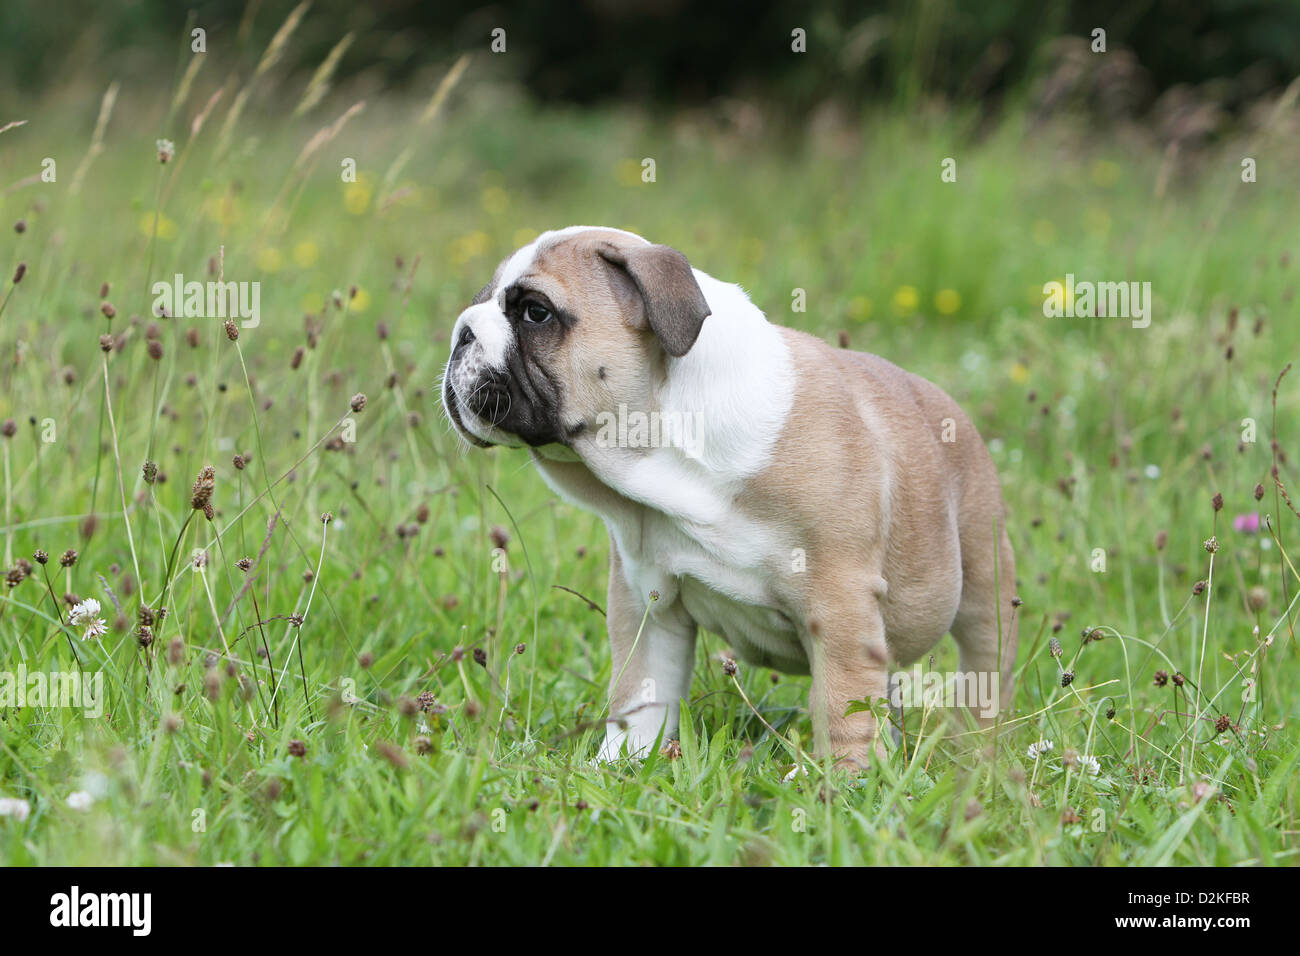 https://c8.alamy.com/comp/D2KFBR/dog-english-bulldog-puppy-standing-in-a-meadow-D2KFBR.jpg